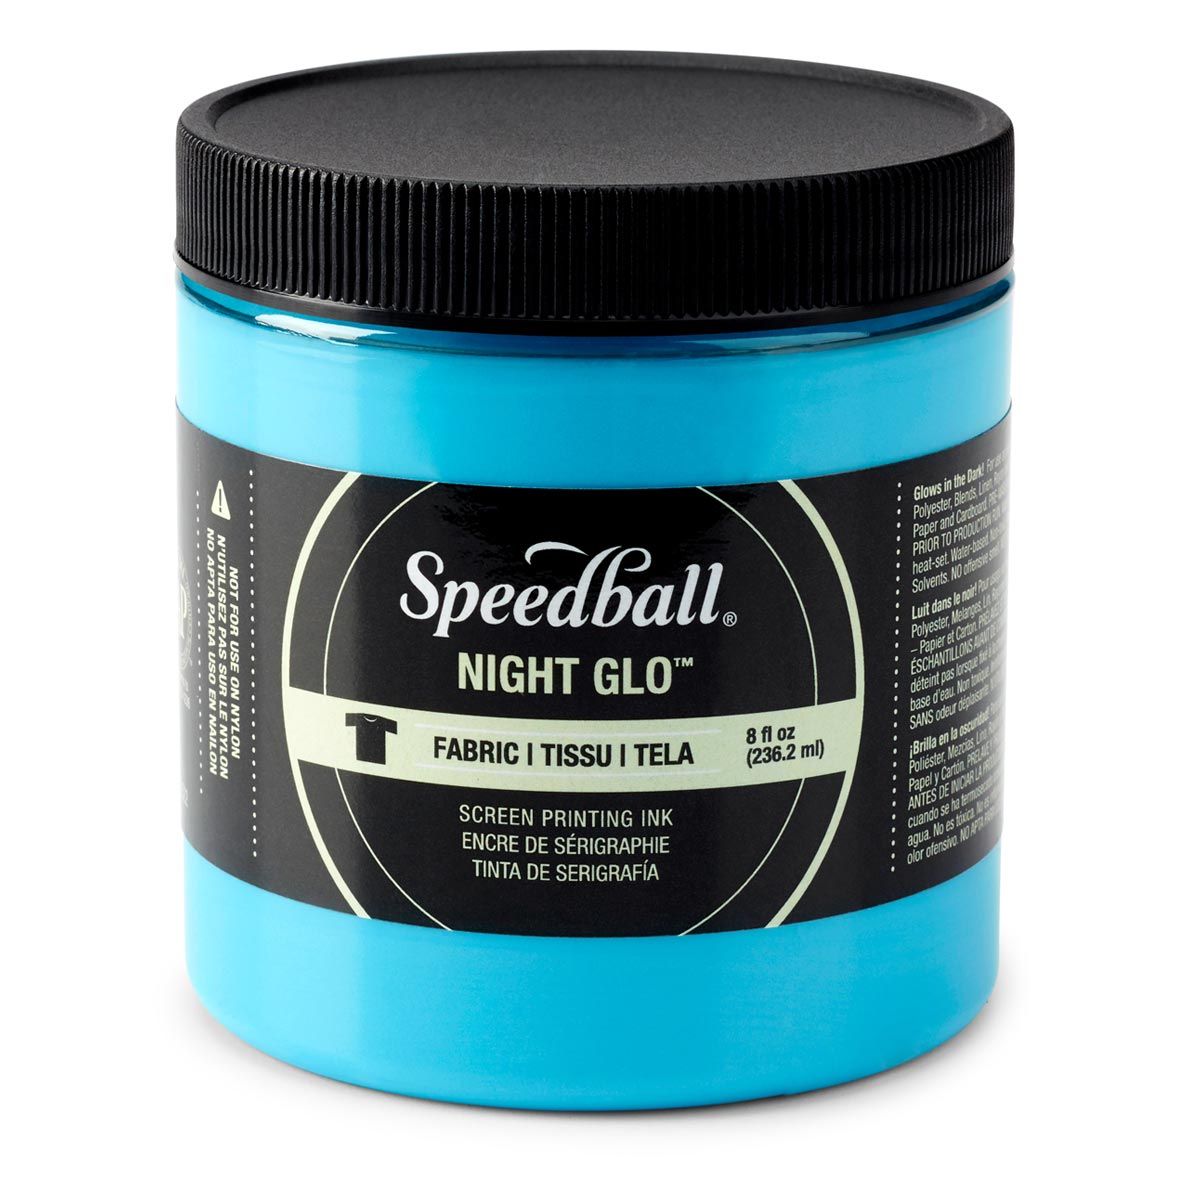 Speedball Night Glo Screen Printing Fabric Ink - Blue